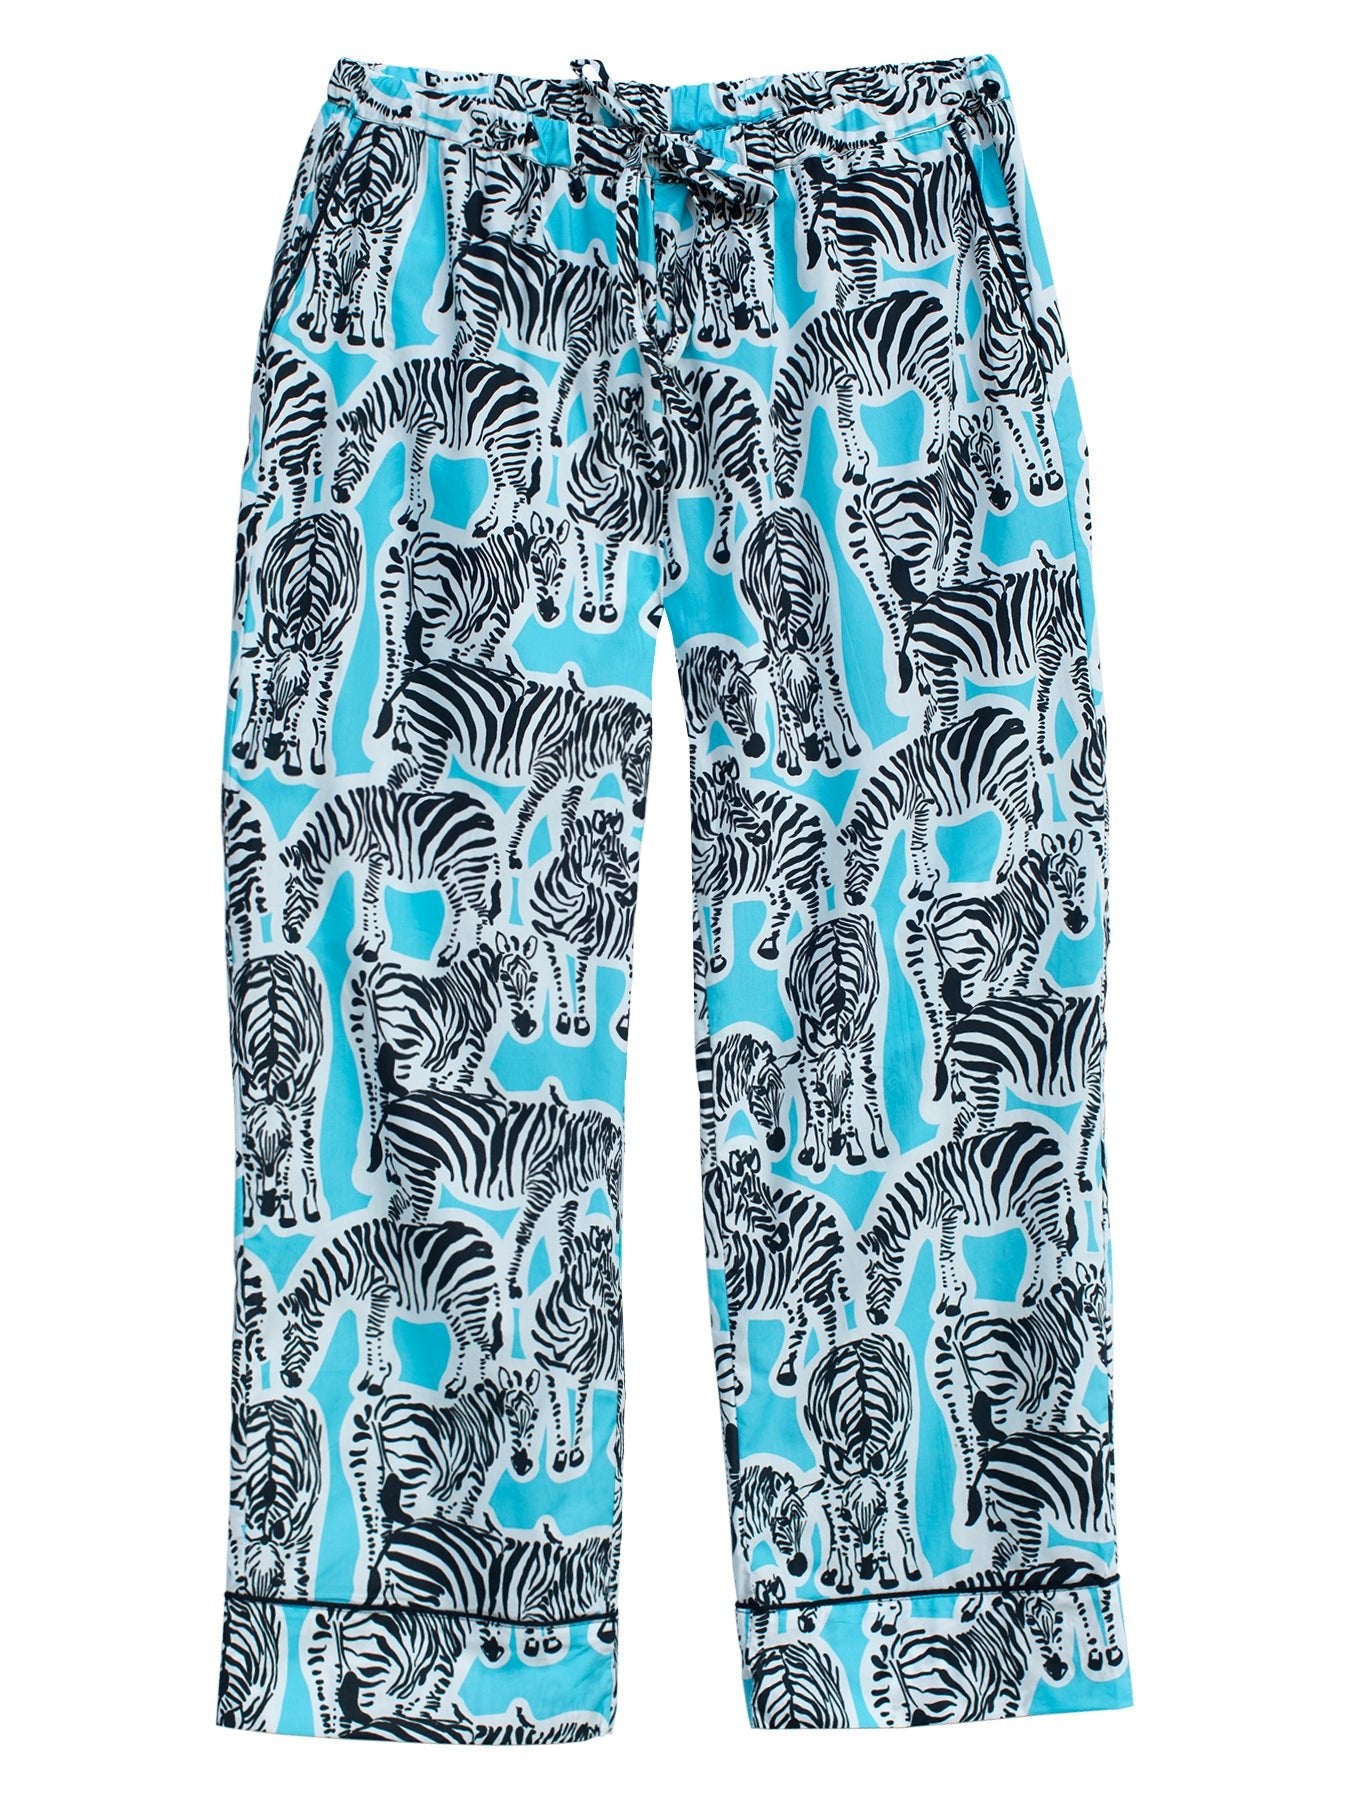 KIERA pajama pant Zebras Blue – Lesley Evers